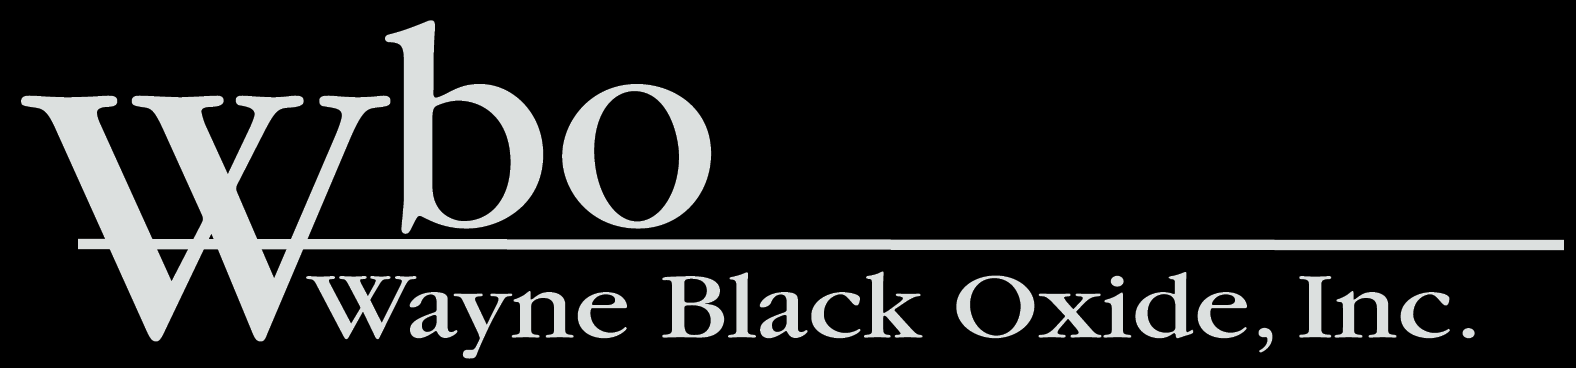 Wayne Black Oxide, Inc.